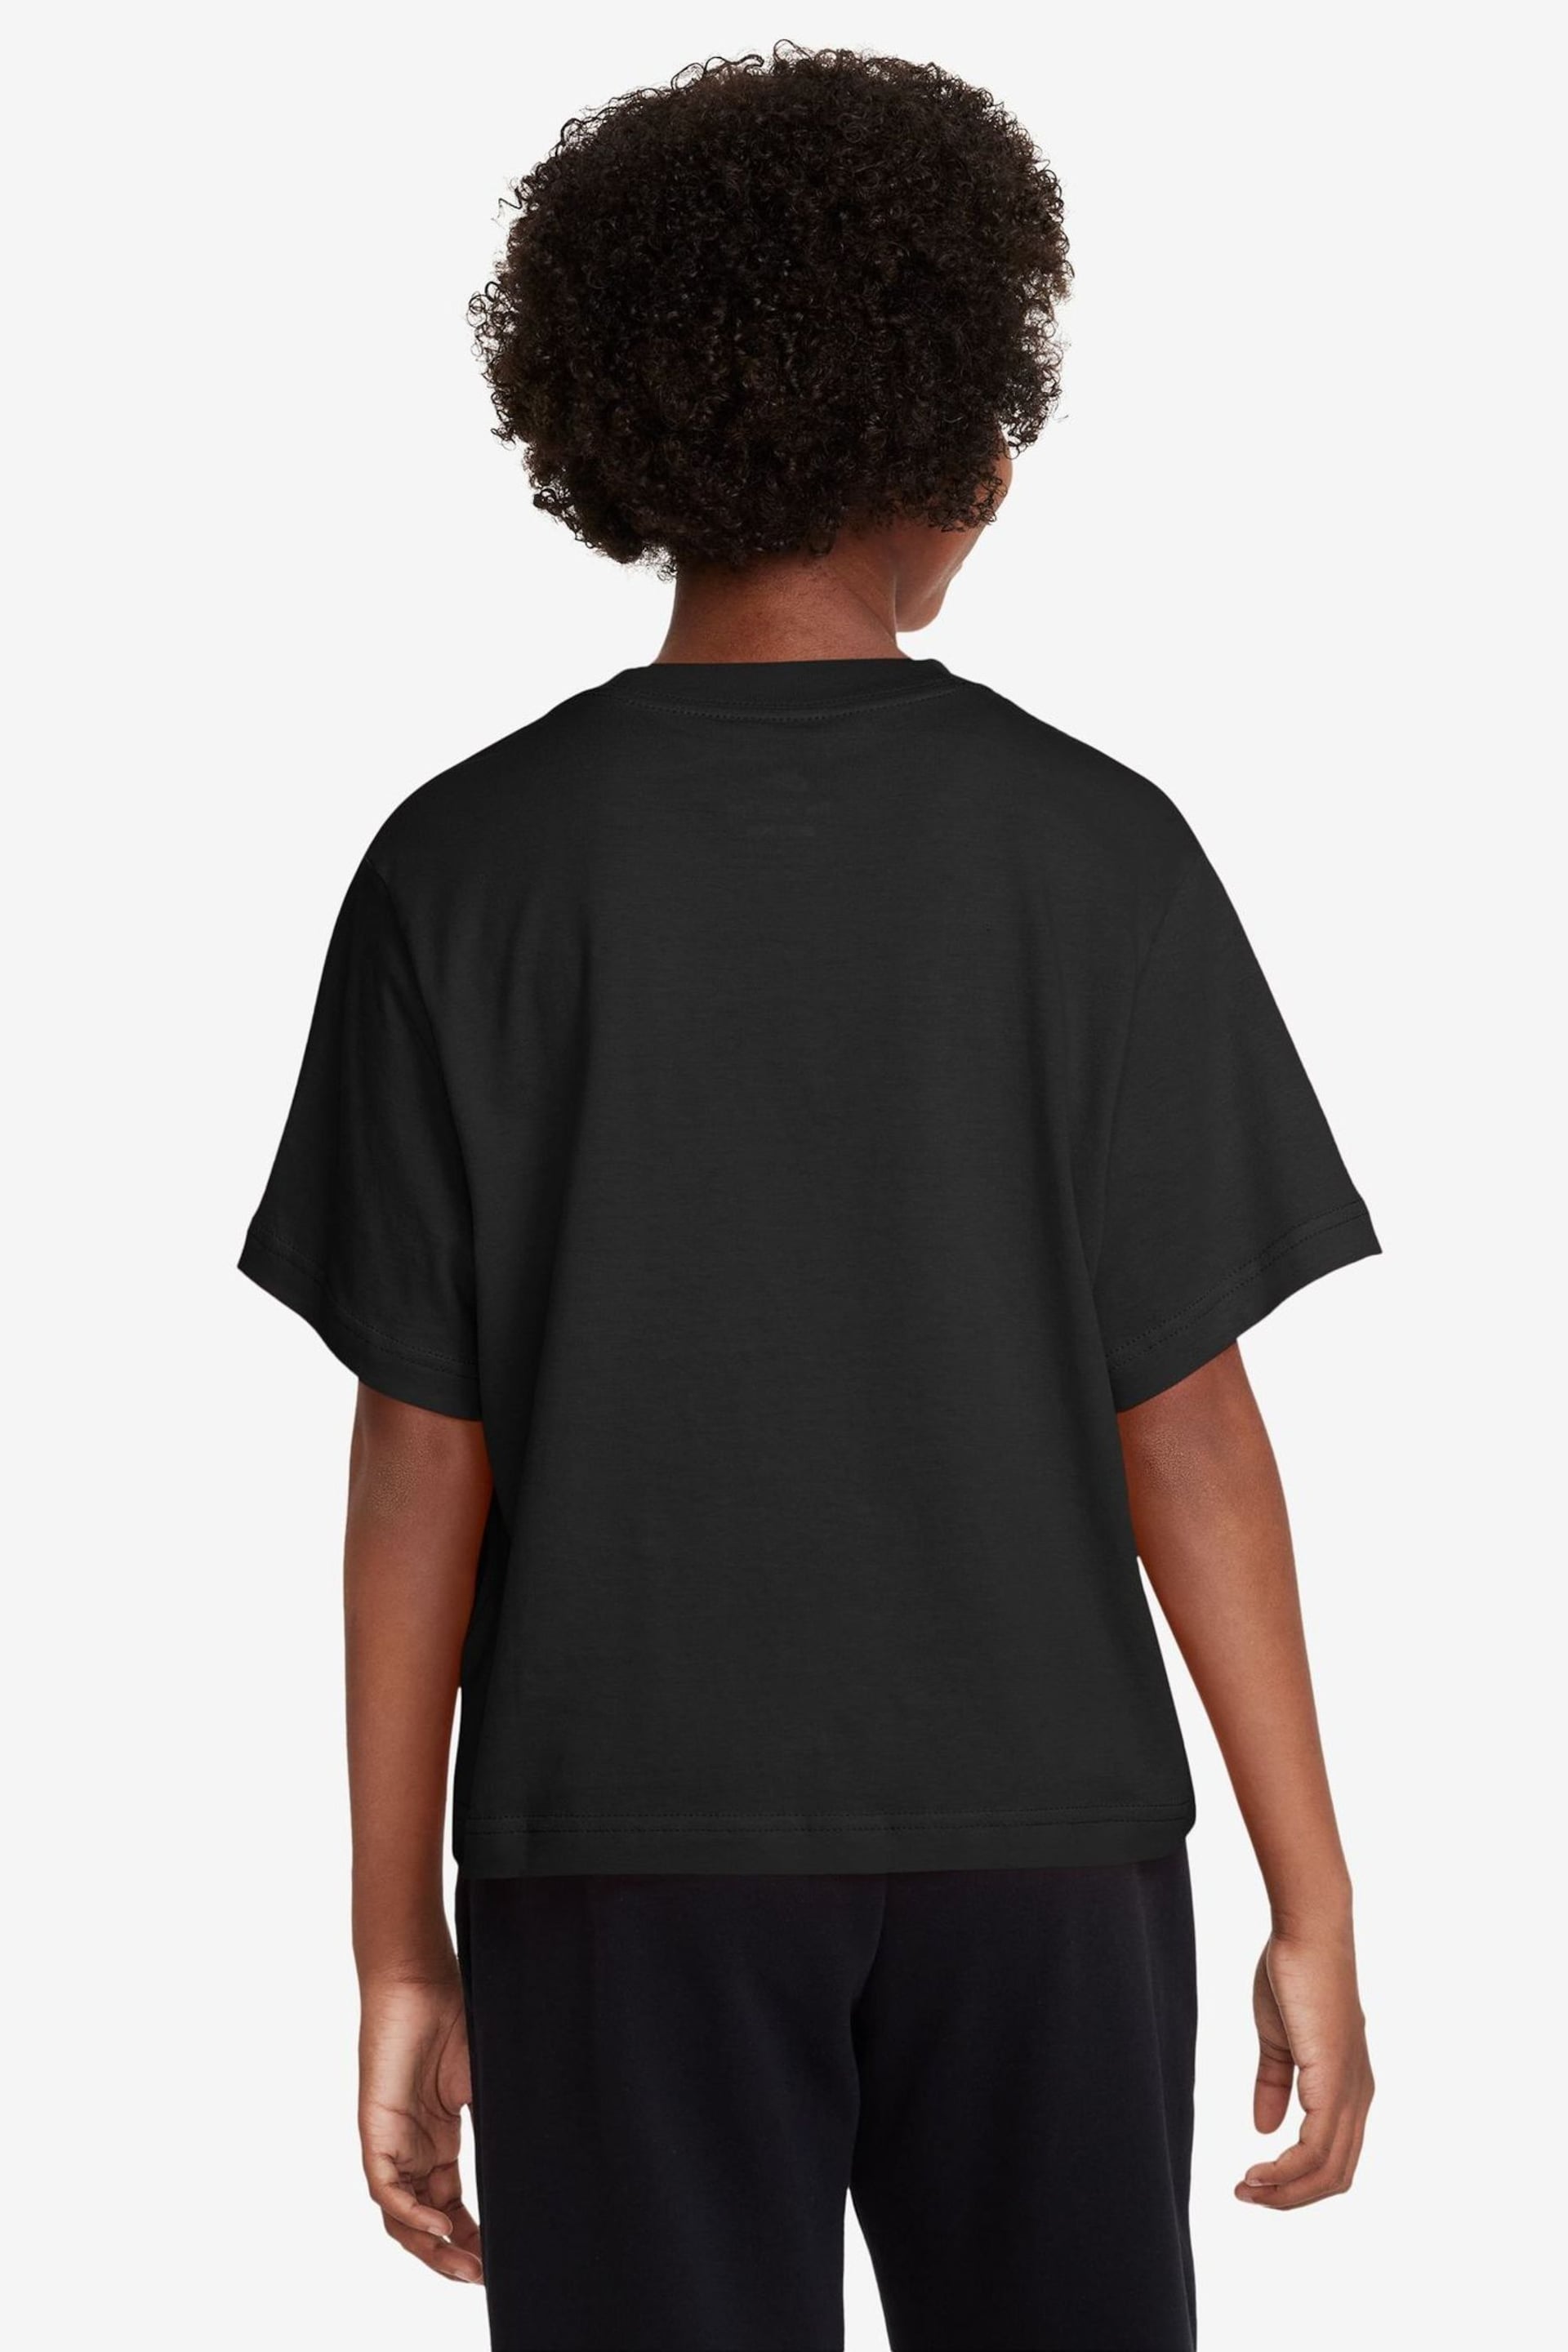 Nike Black Oversized Essentials Boxy T-Shirt - Image 2 of 4